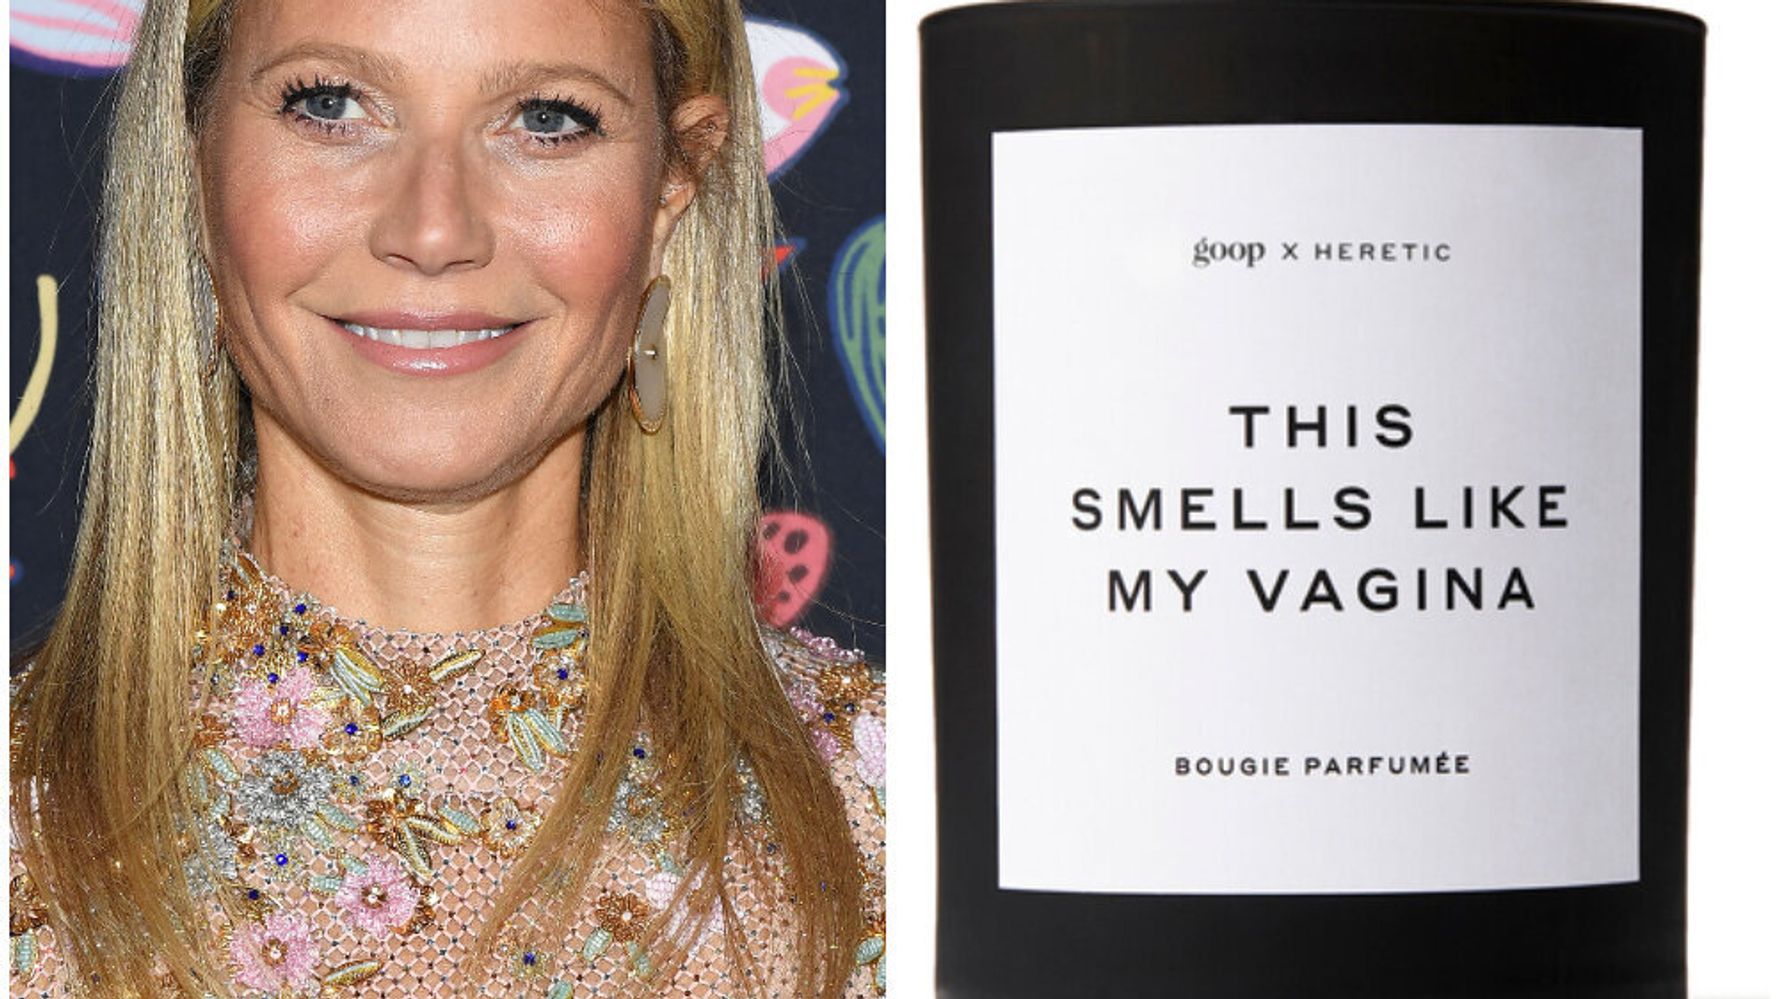 Vagina perfume like that smells Popular Singer